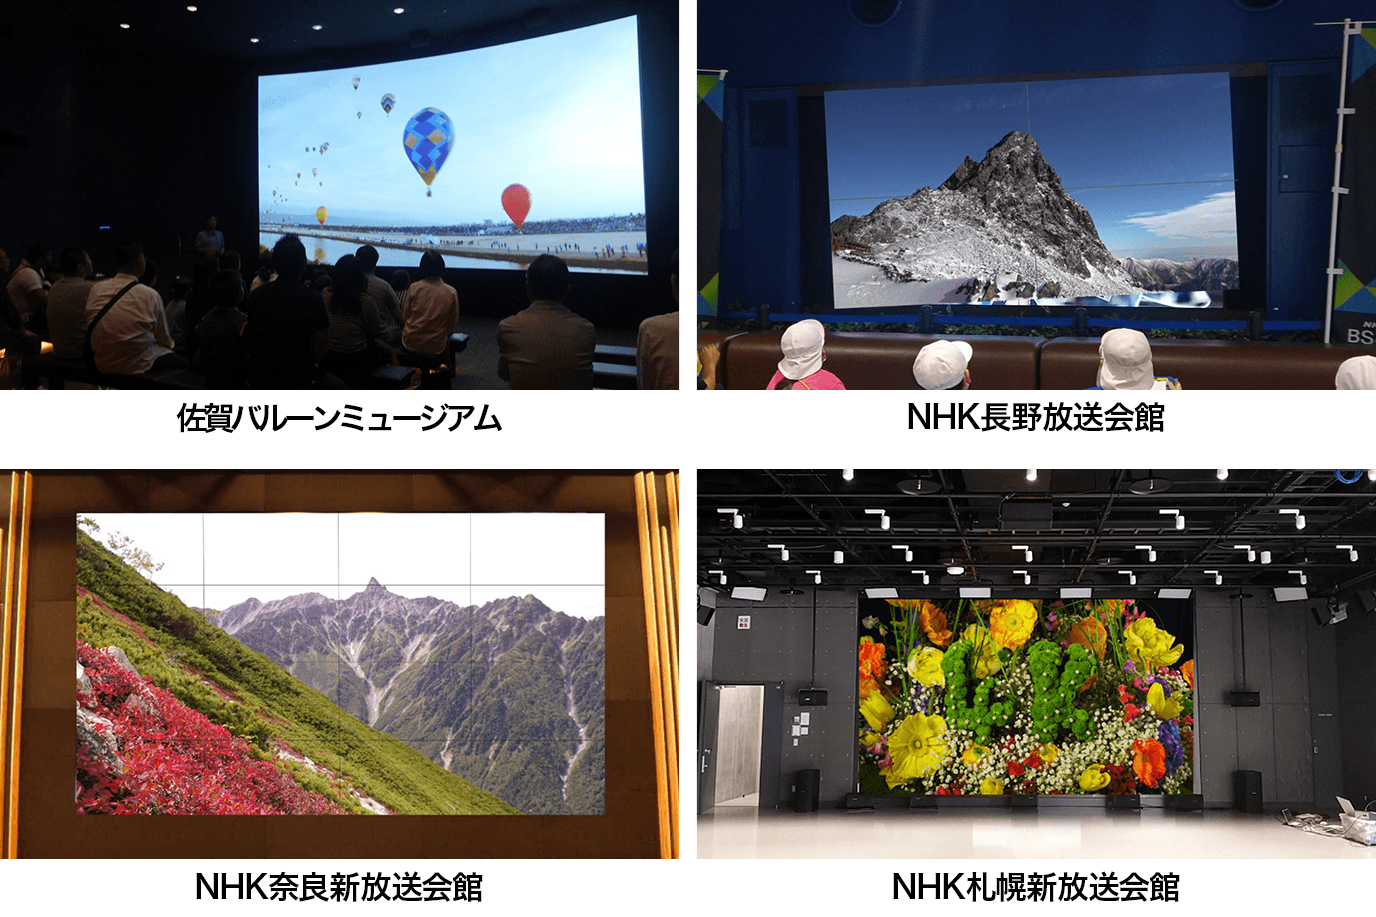 佐賀バルーンミュージアム、NHK長野放送会館、NHK奈良新放送会館、NHK札幌新放送会館の写真